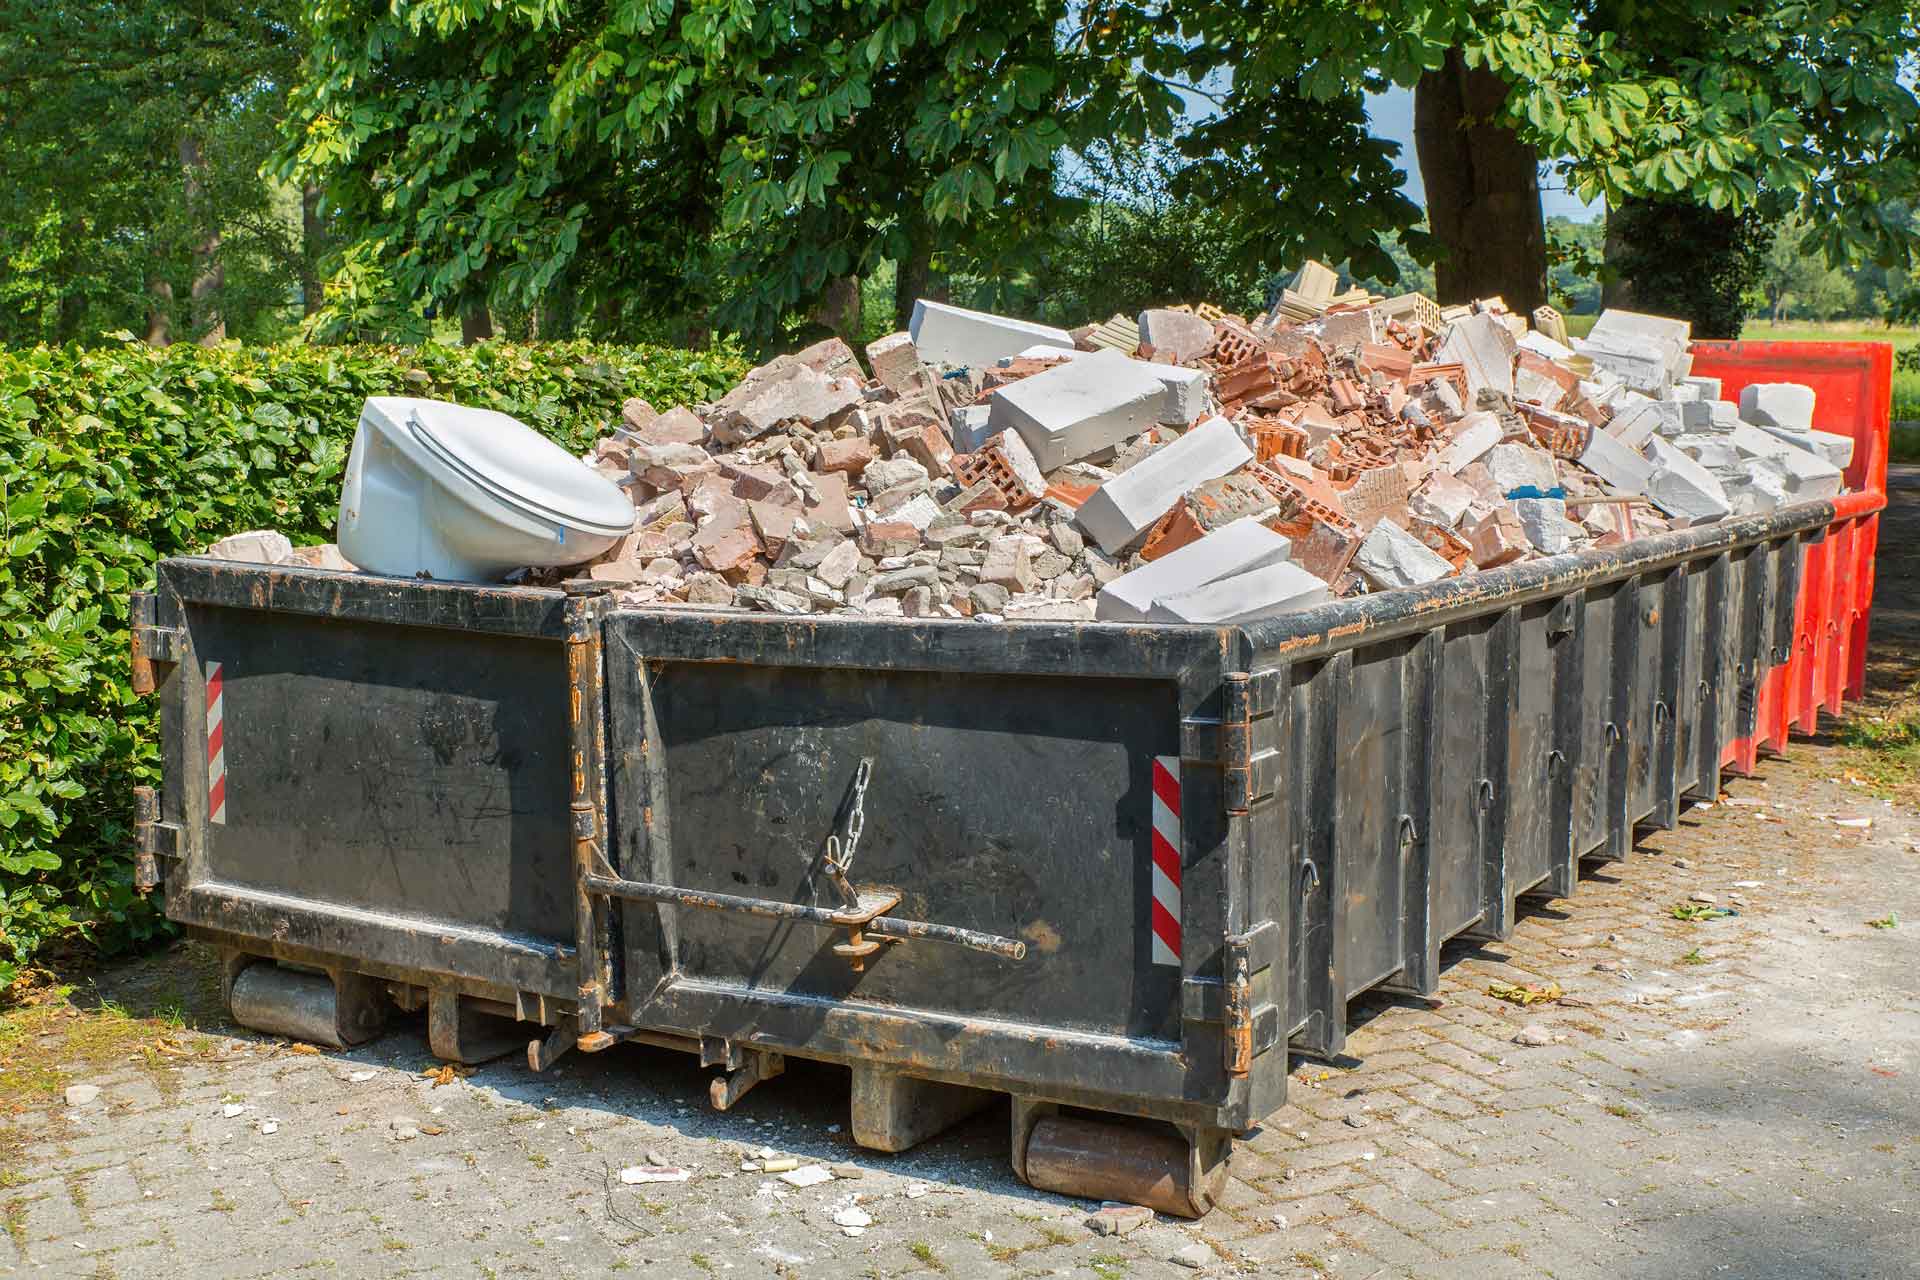 Rental dumpster full of bricks and cinderblocks